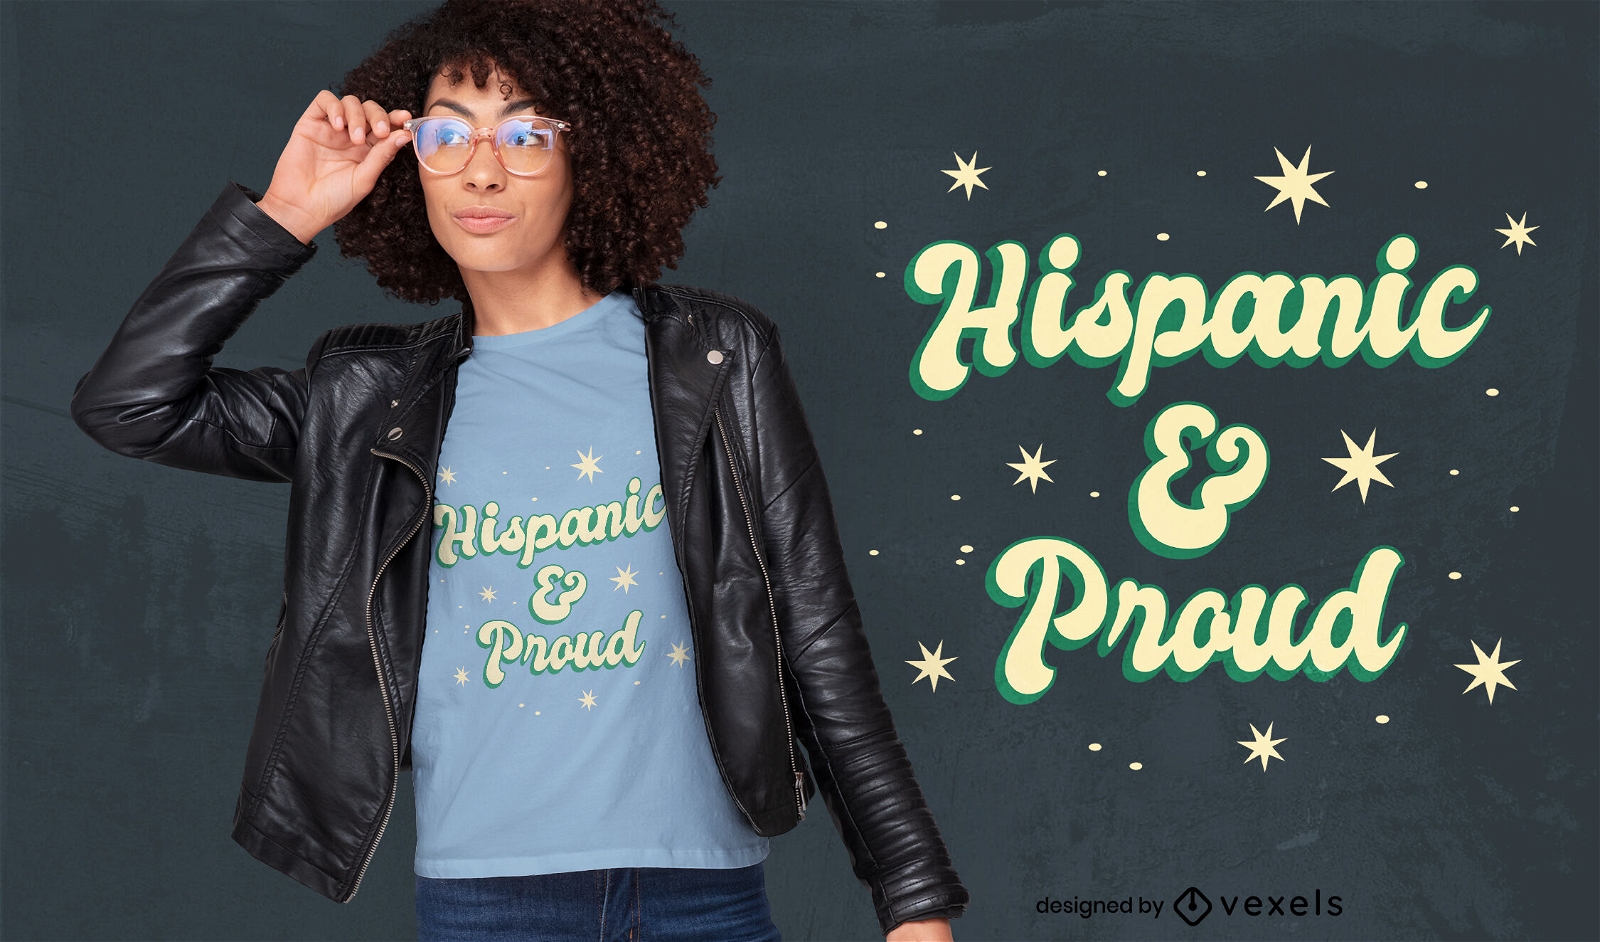 Hispanisches & stolzes Zitat-T-Shirt-Design